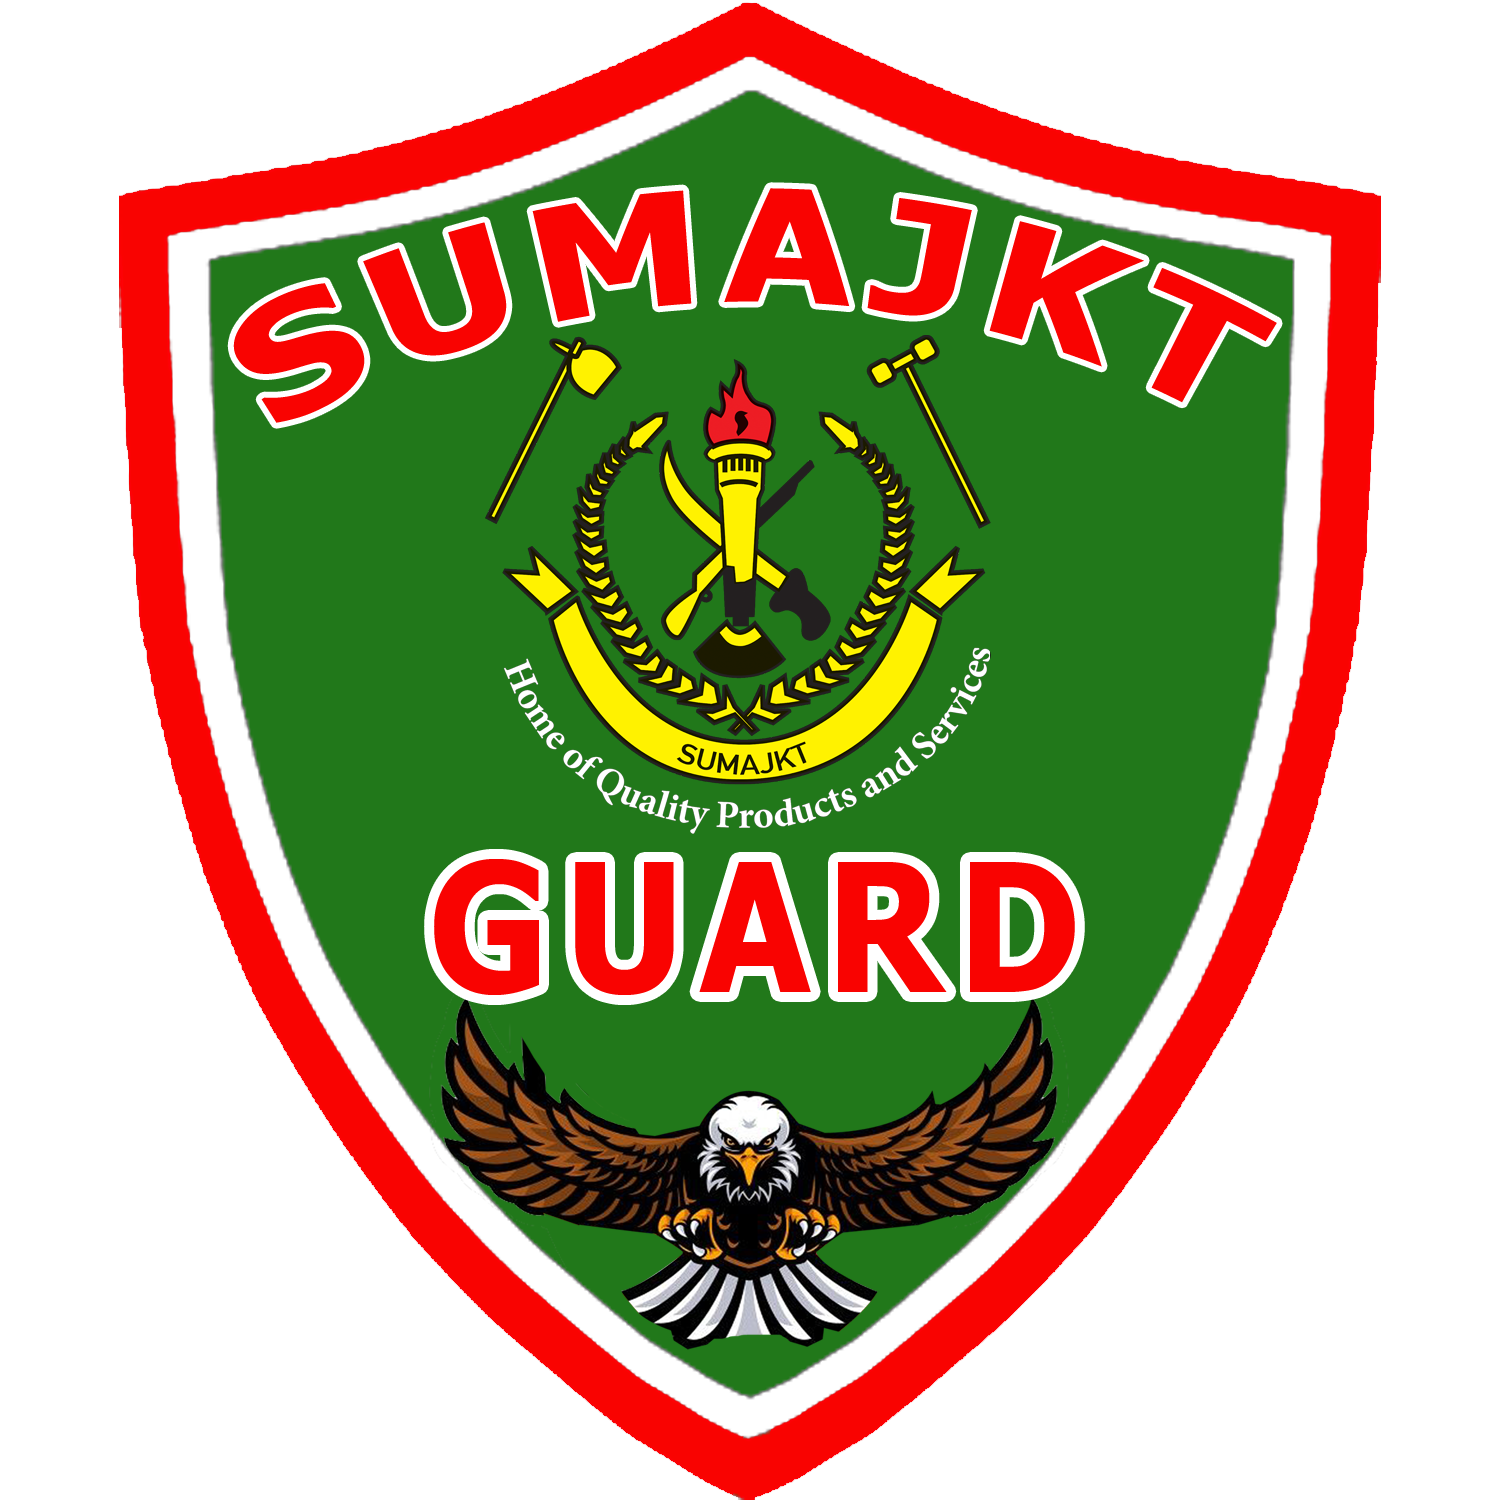 SUMAJKT Guard LTD